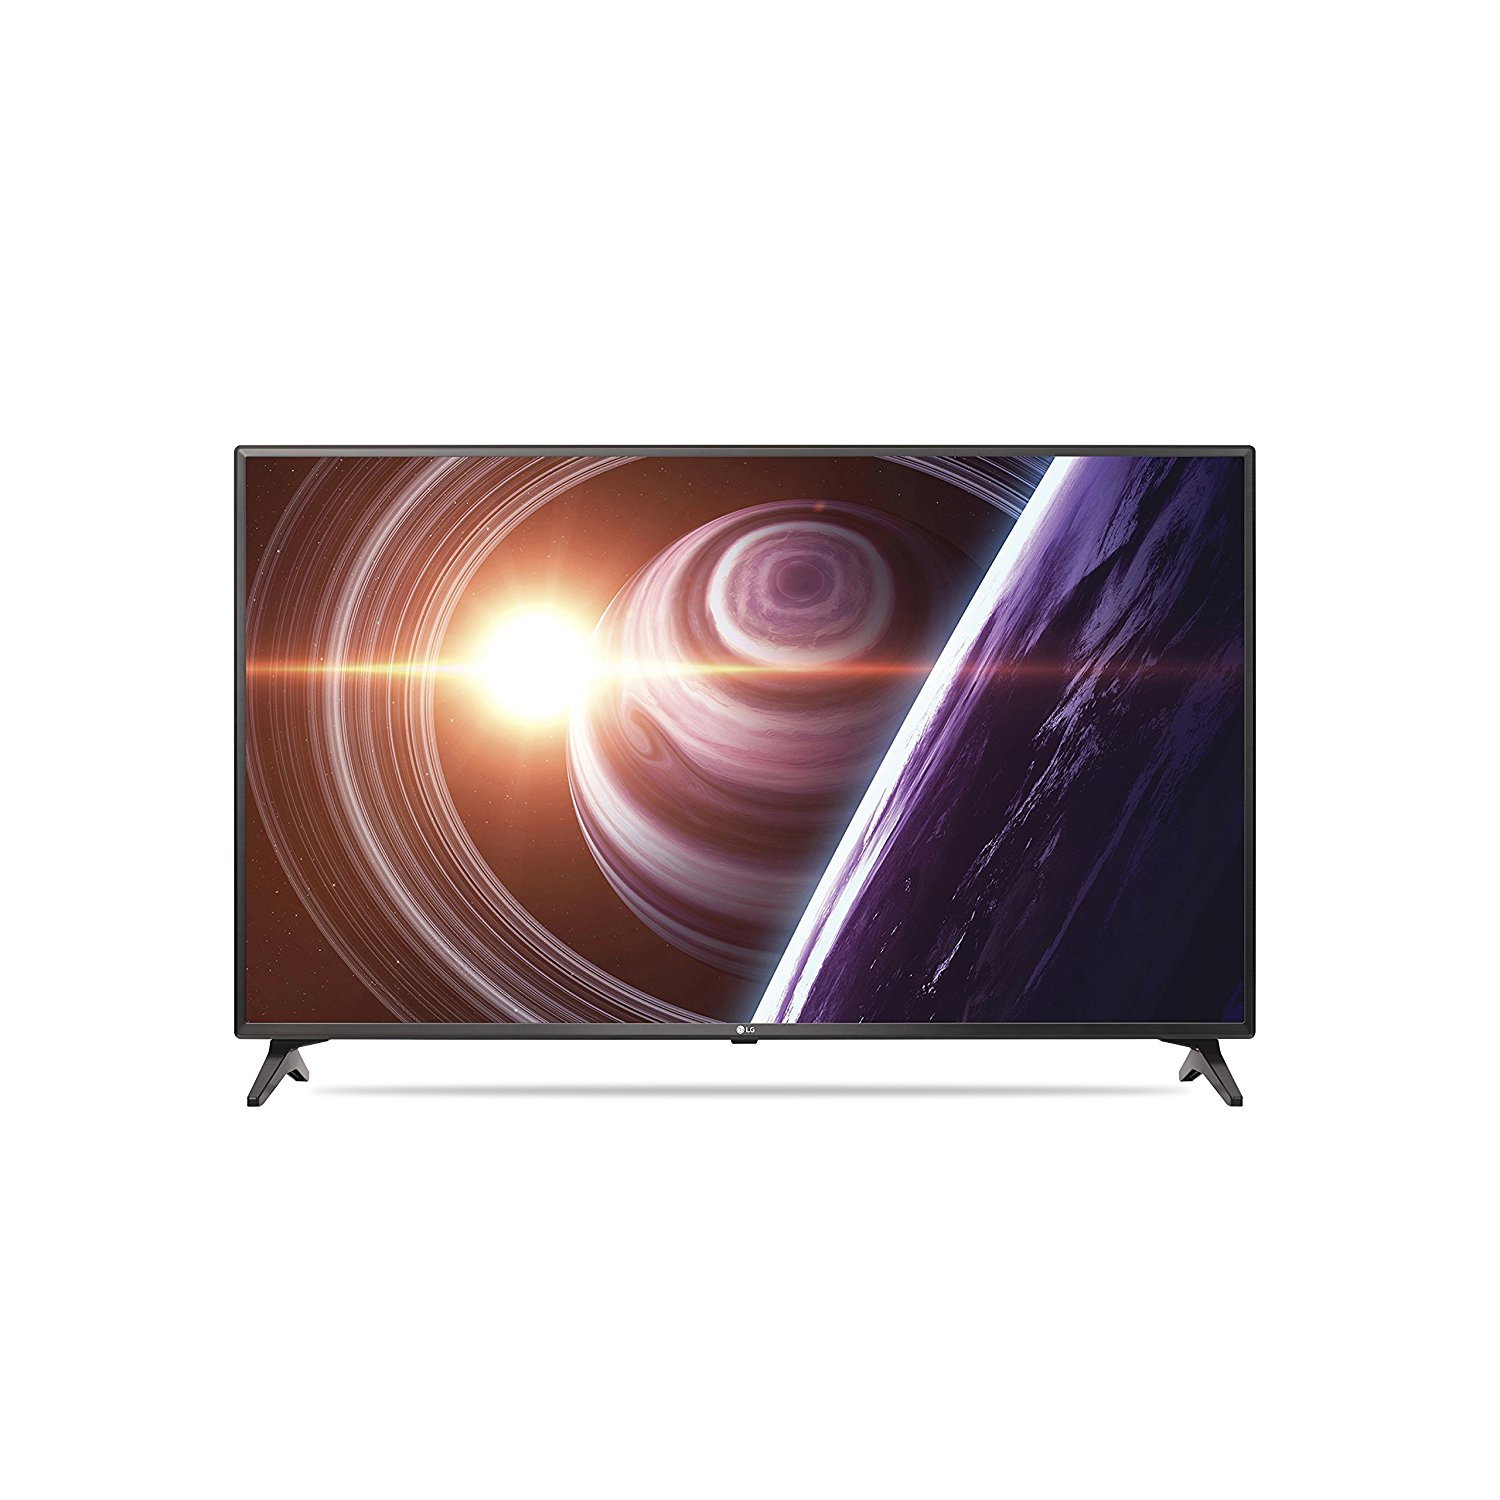  TV LED FHD LG 43LJ614V de 43 Pulgadas con Smart TV solo 229,46€